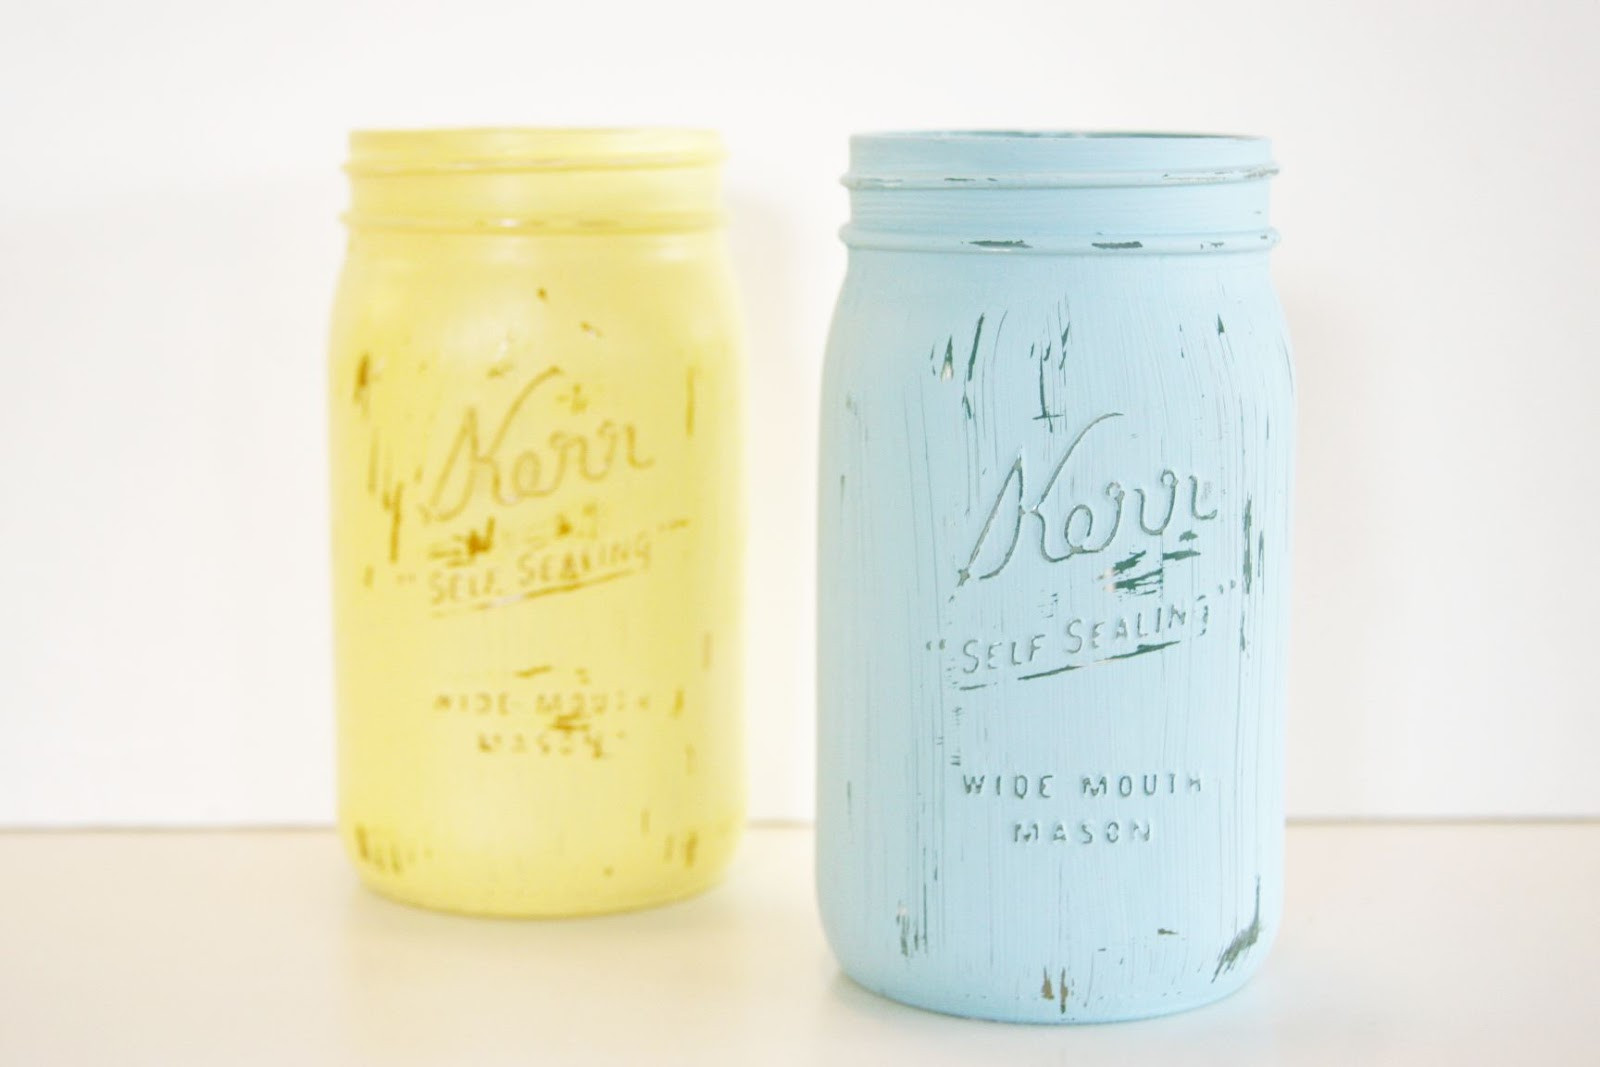 Best ideas about DIY Painted Mason Jars
. Save or Pin DIY Painted Mason Jars Now.